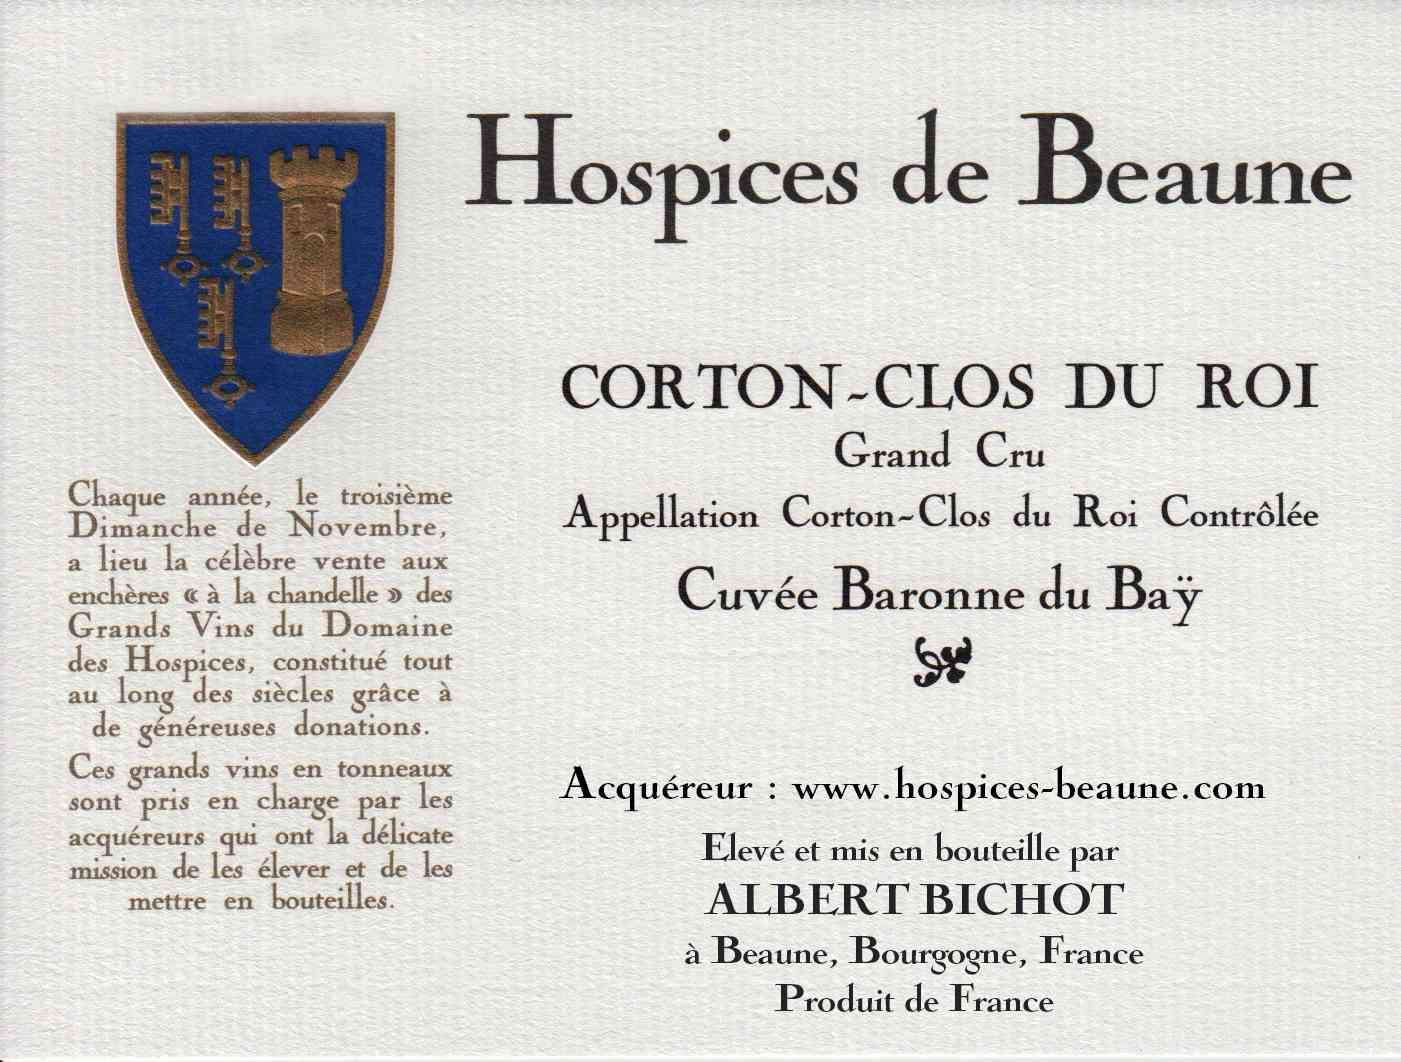 Encheres-auction-HospicesdeBeaune-AlbertBichot-CortonClosduRoy-GrandCru-Cuvee-BaronneduBay